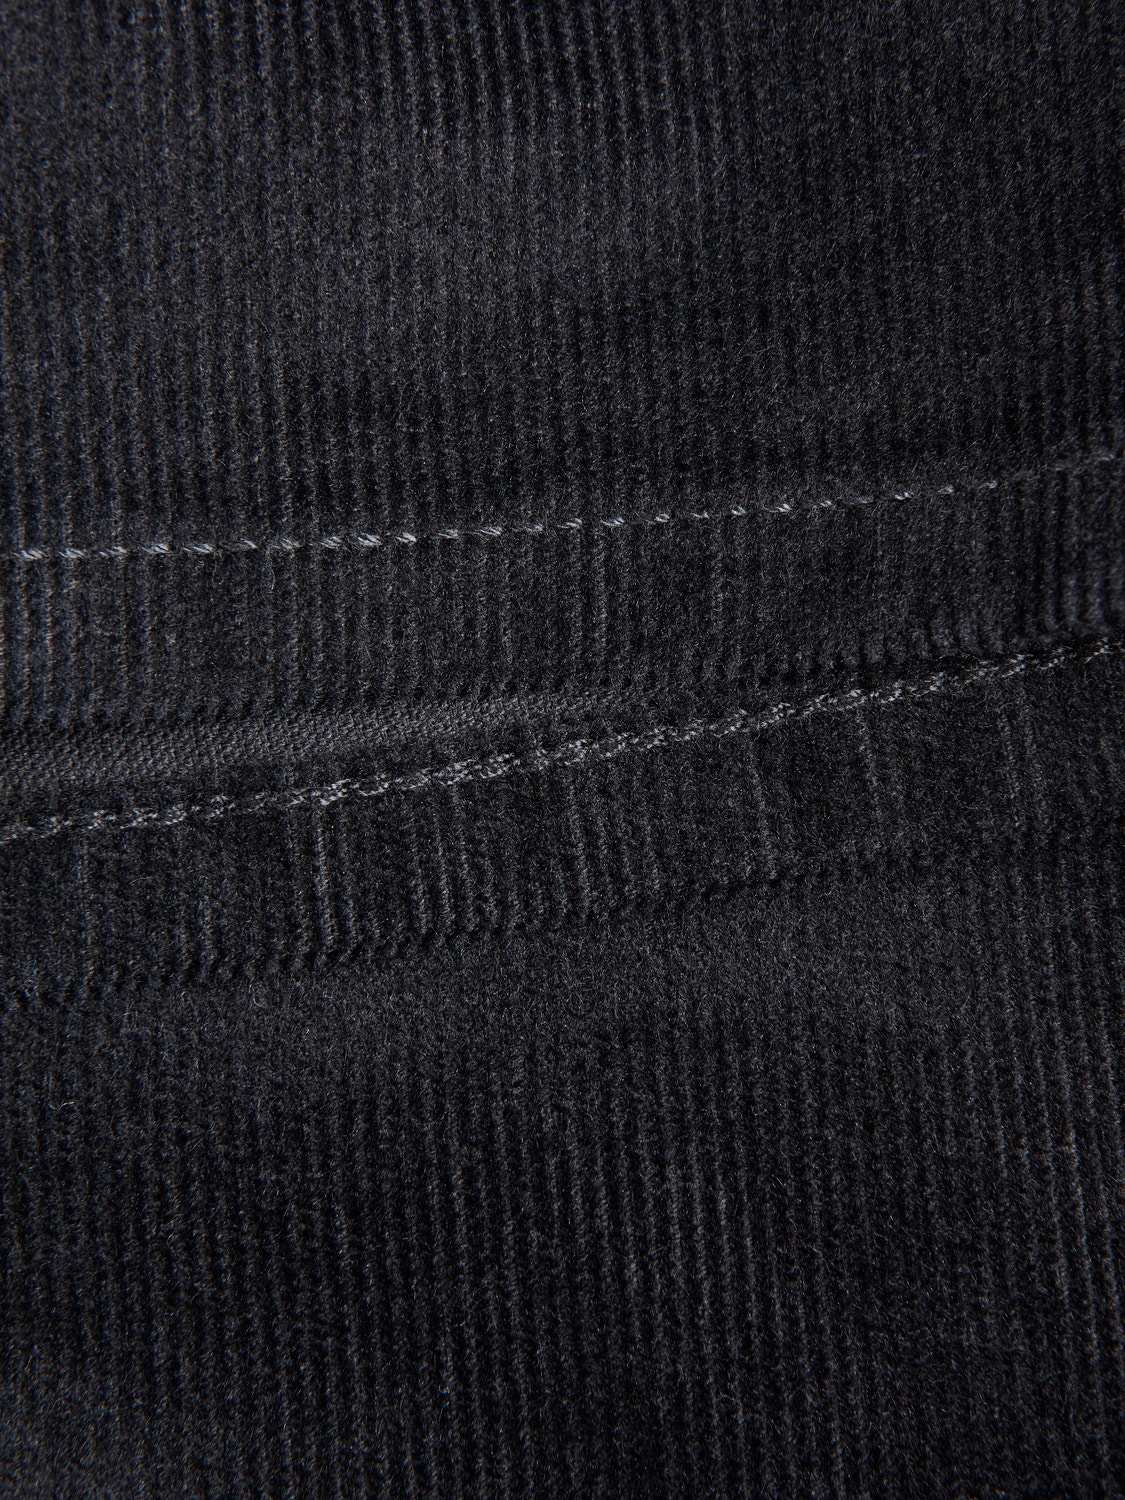 JJXX JXGELLY Classic trousers -Black - 12217215